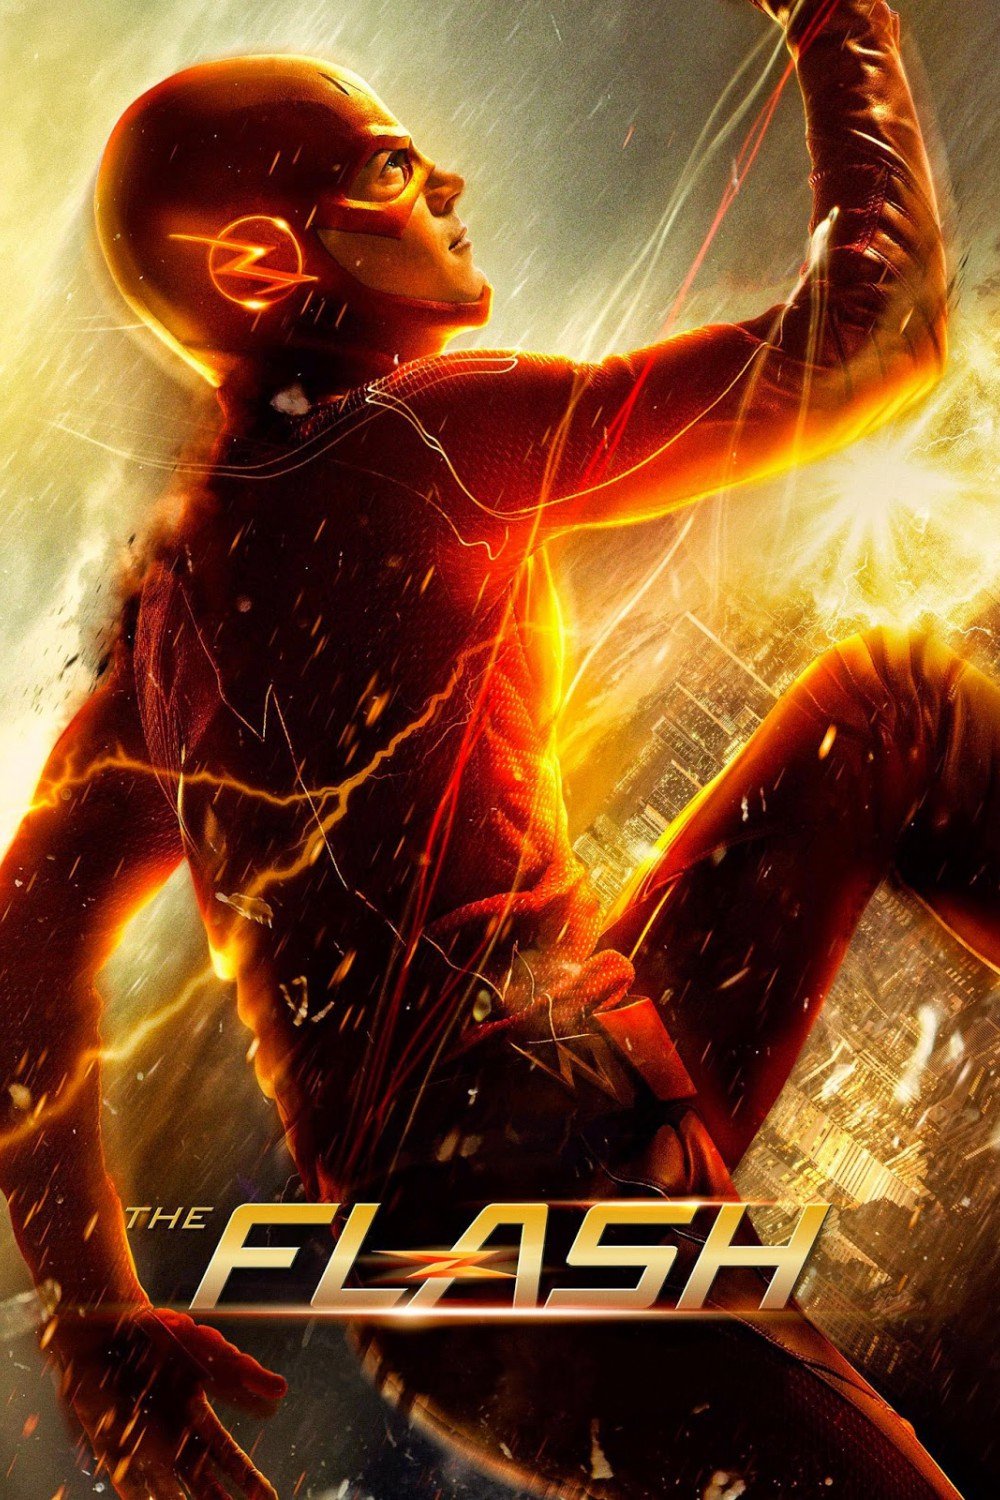 The flash season 4 episode 1 free online